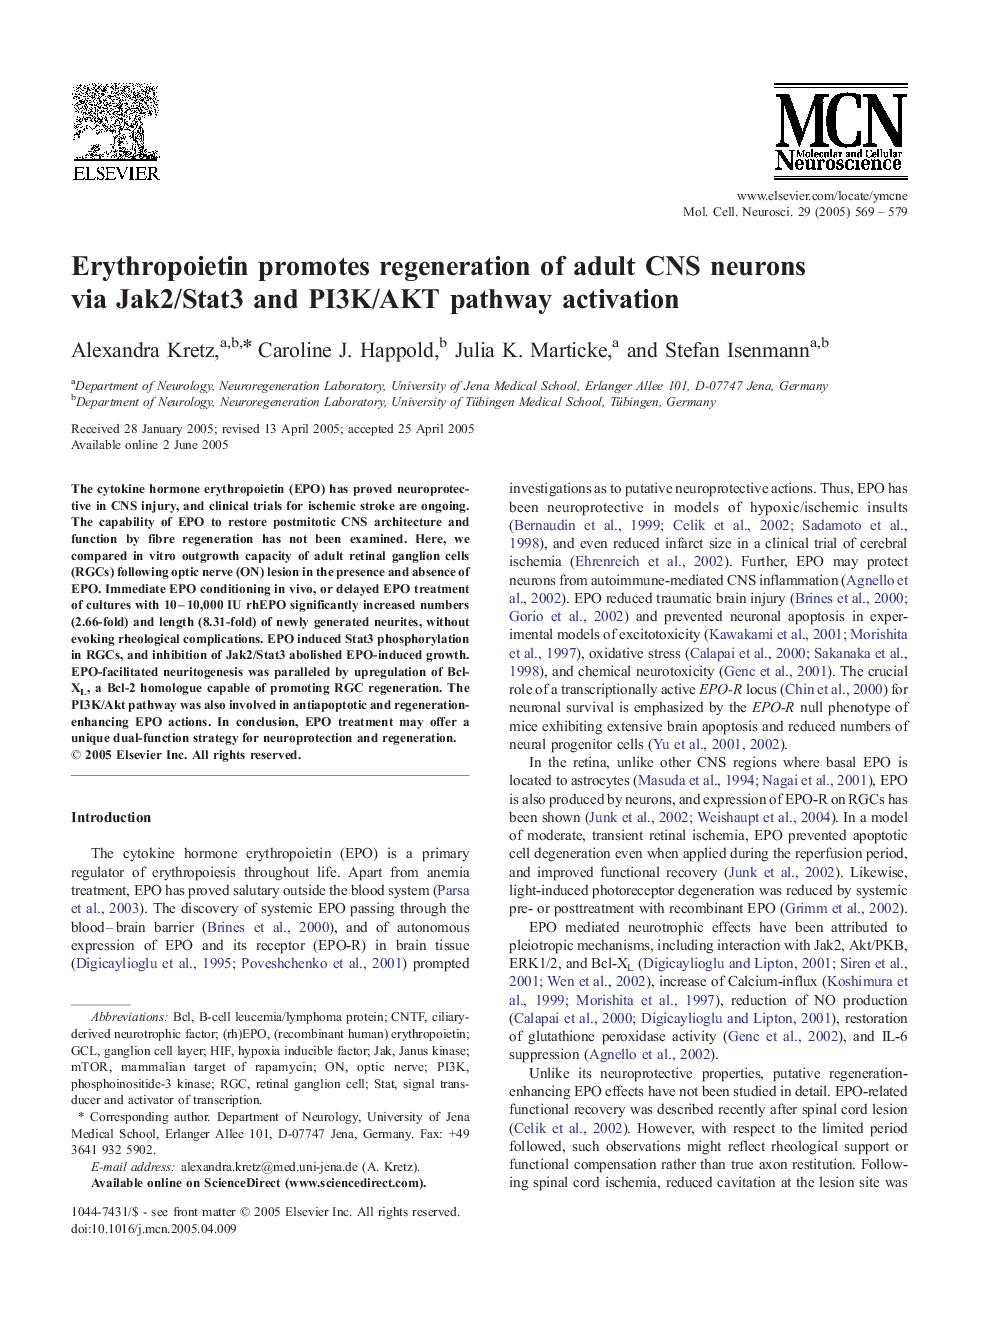 Erythropoietin promotes regeneration of adult CNS neurons via Jak2/Stat3 and PI3K/AKT pathway activation